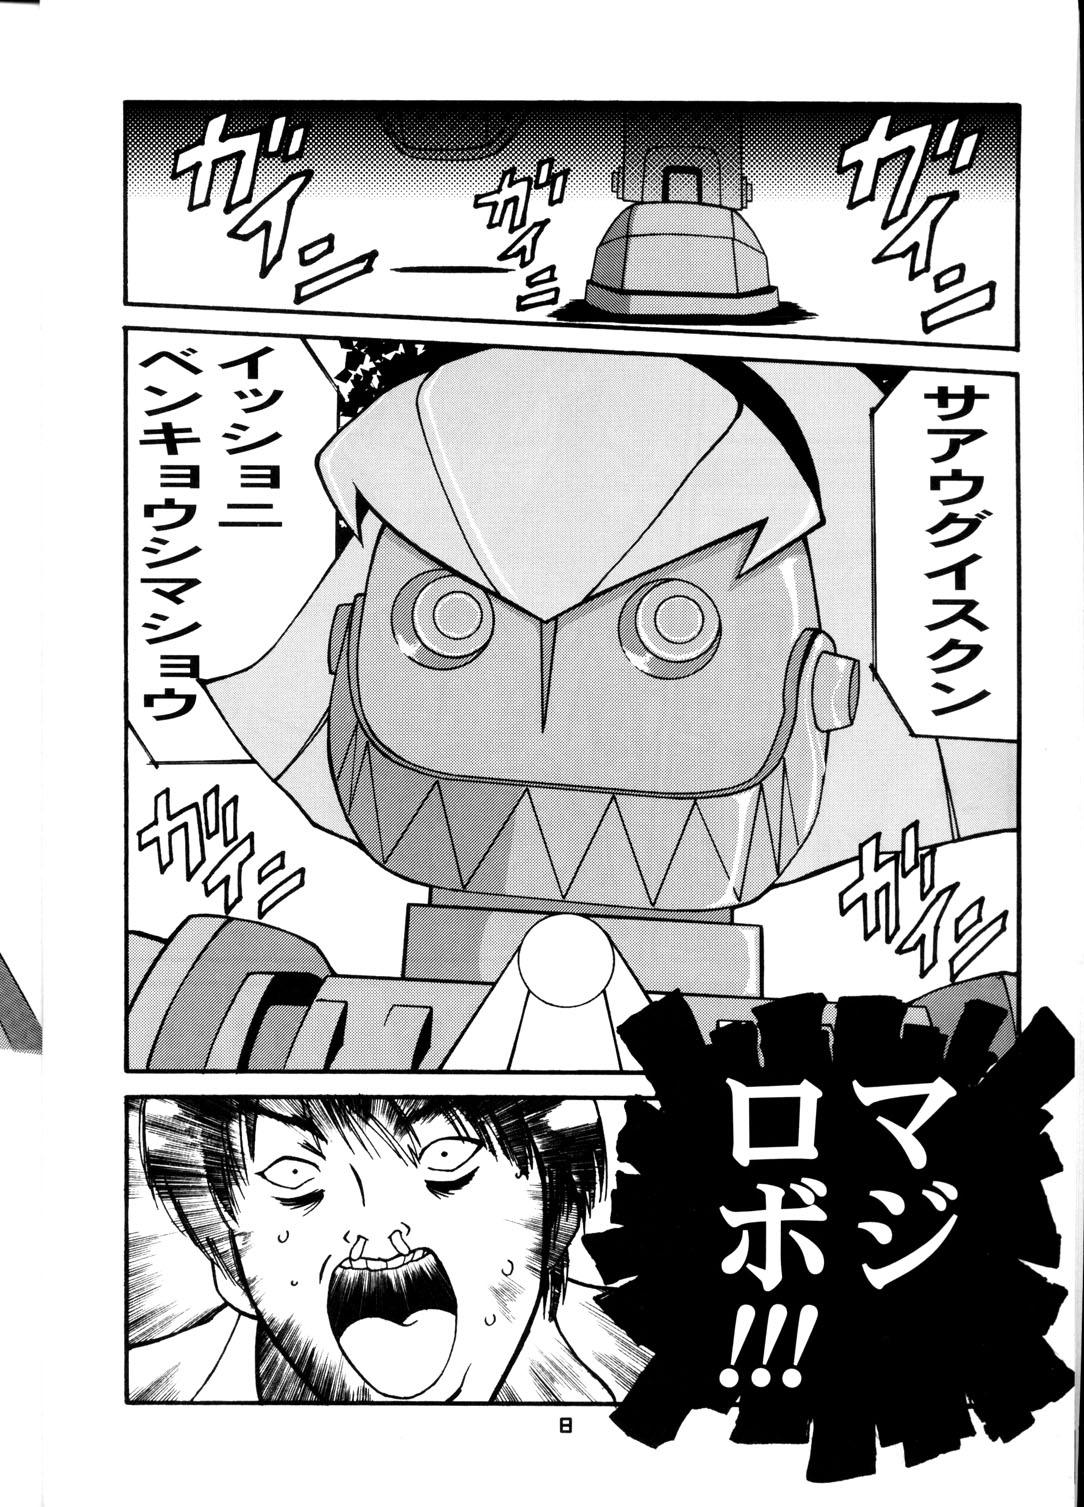 Realsex Oh! Robomusume Chuu Shuugou! - Cutey honey The big o Space adventure cobra Megazone 23 Moero robocon Rainbow sentai robin Load - Page 8